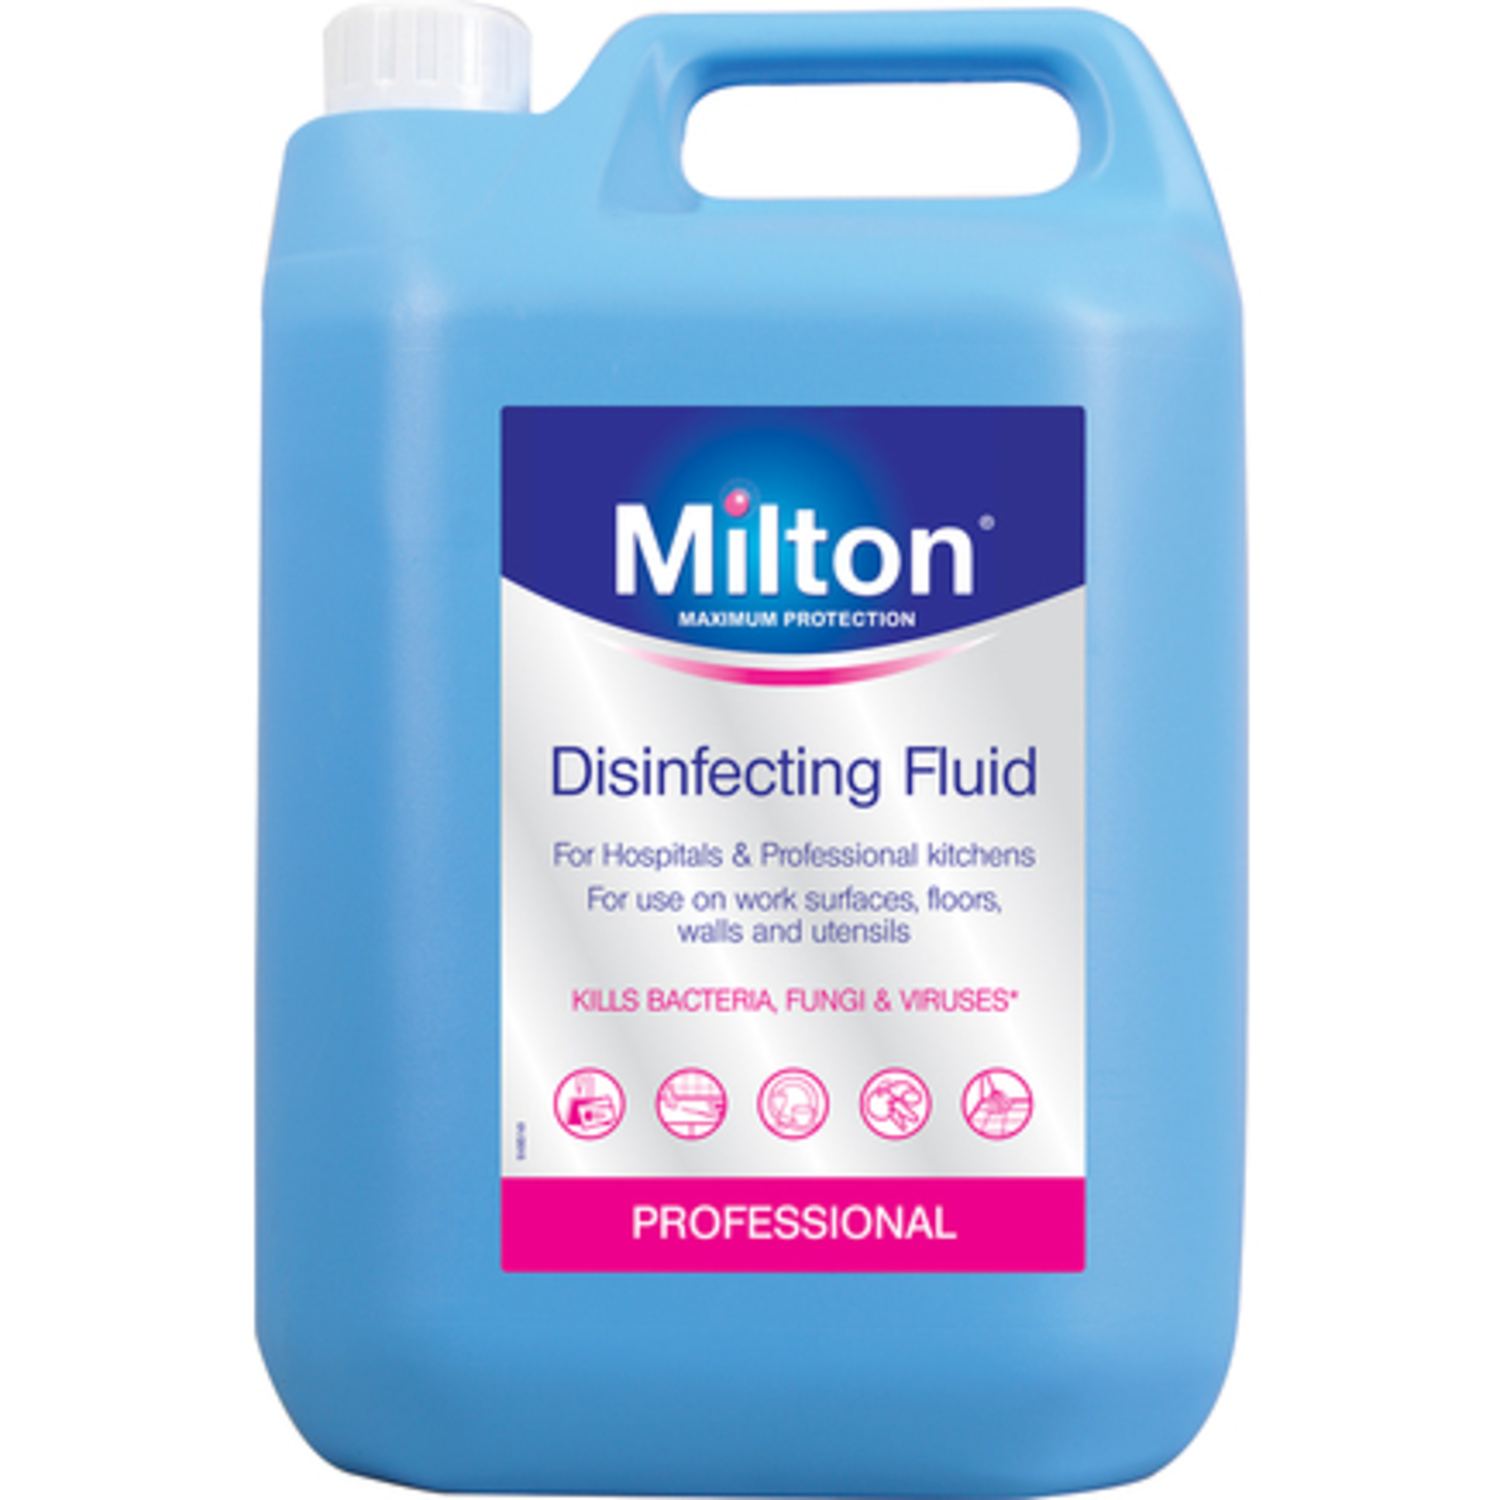 Milton Disinfecting Fluid 5 Litre - 2 Pack